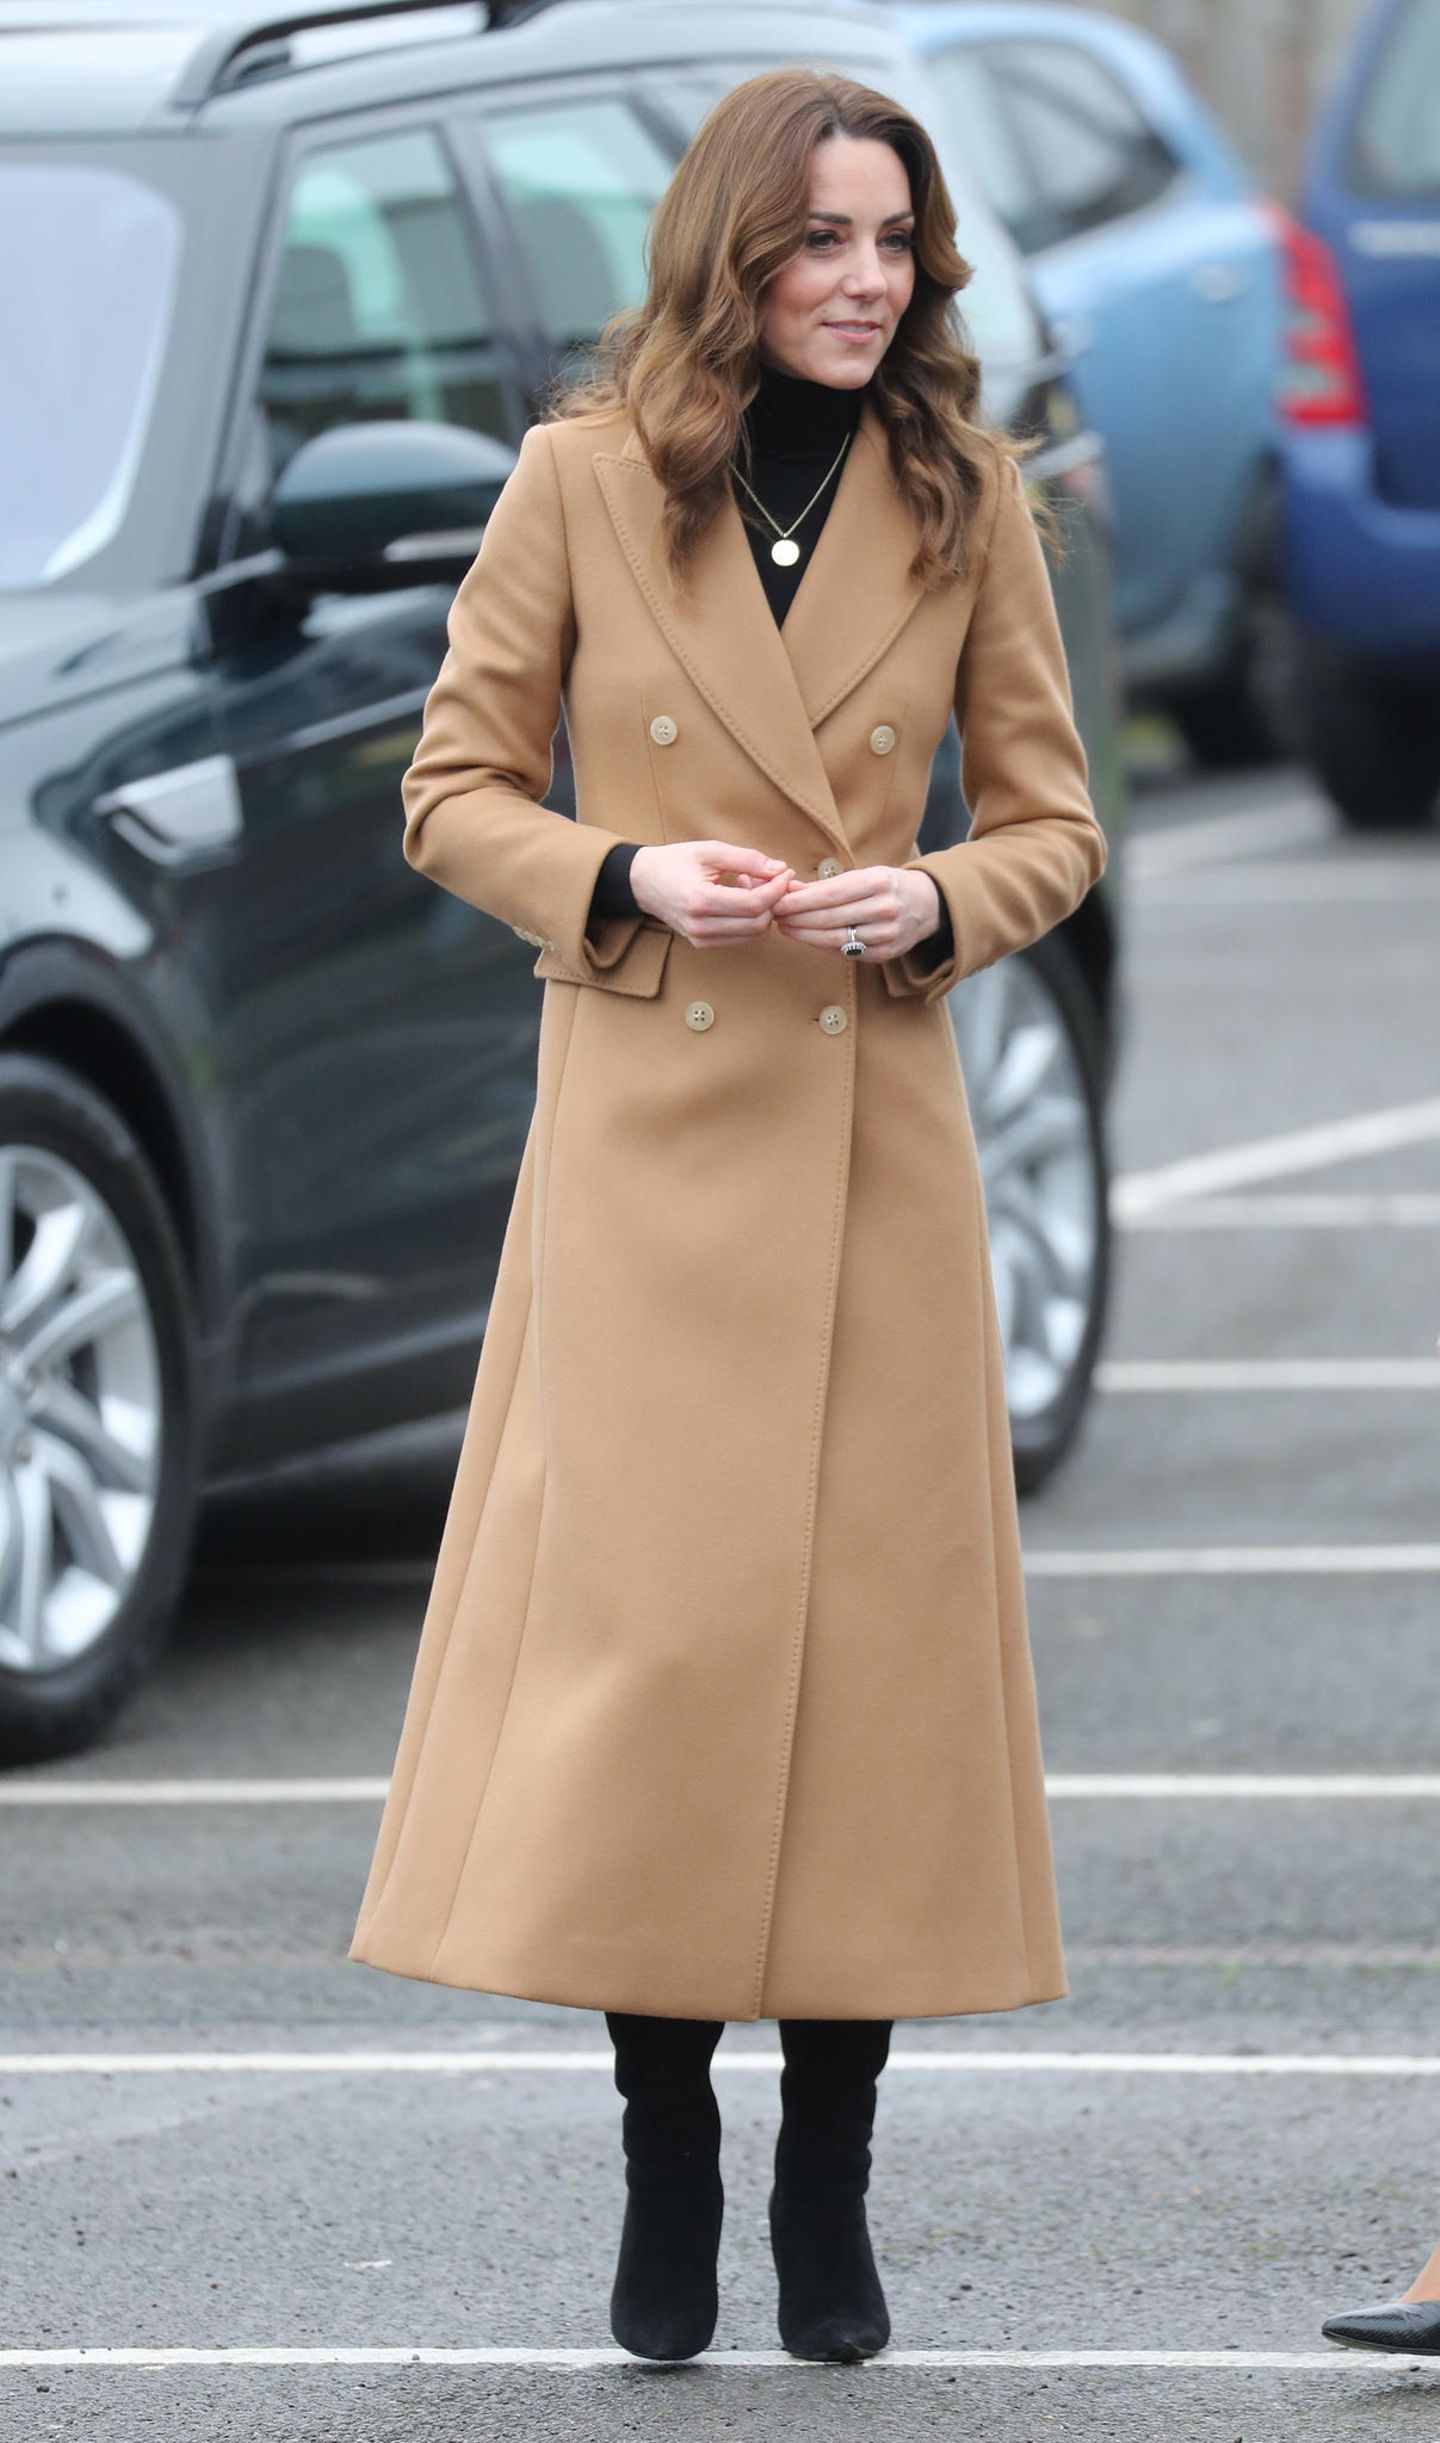 Royals, die günstige Kleidung tragen: Kate Middleton im Camel Coat